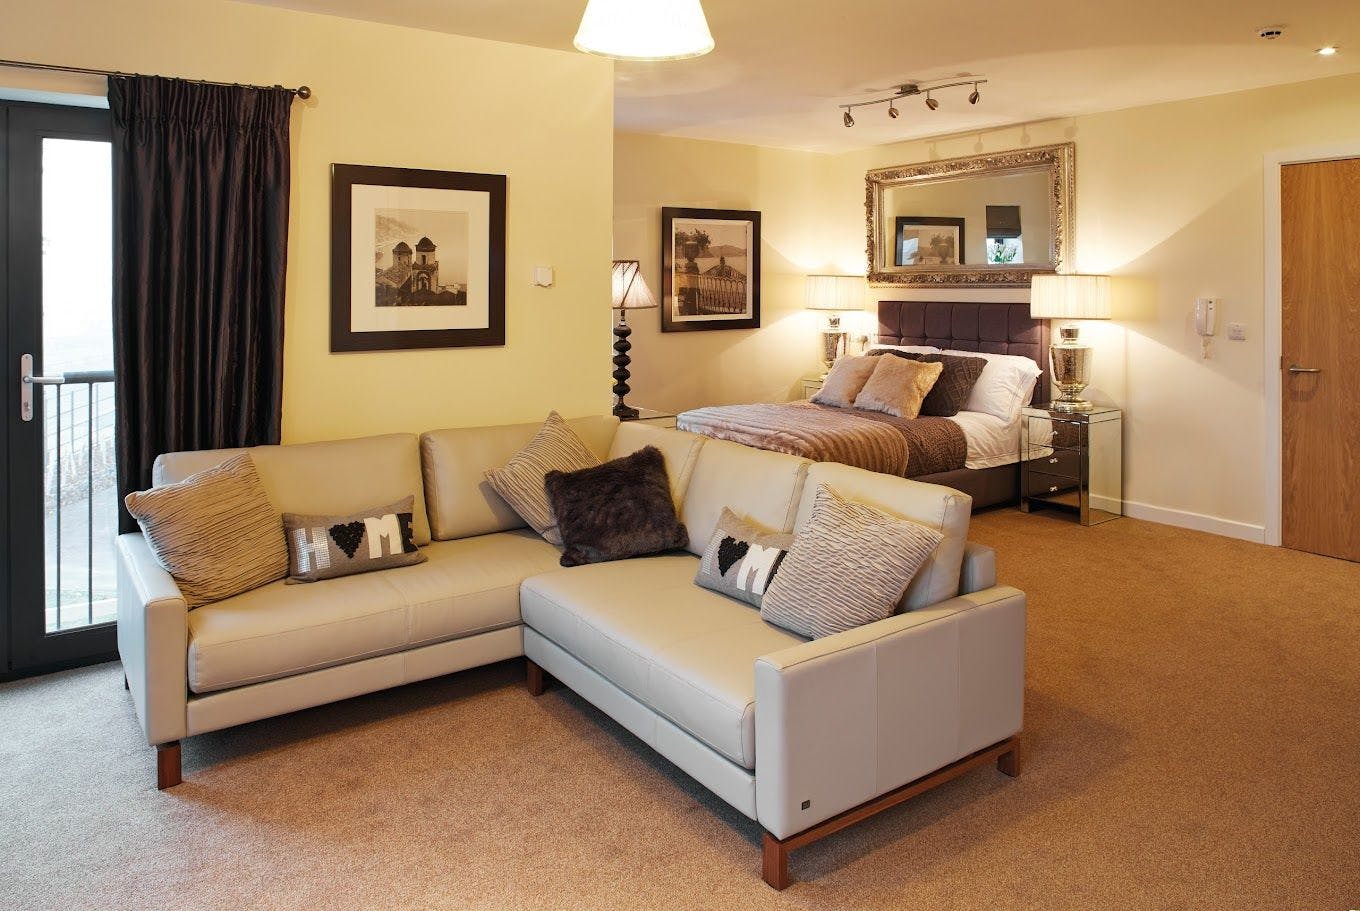 Bedroom of Seacroft Grange care home in Leeds, Yorkshire